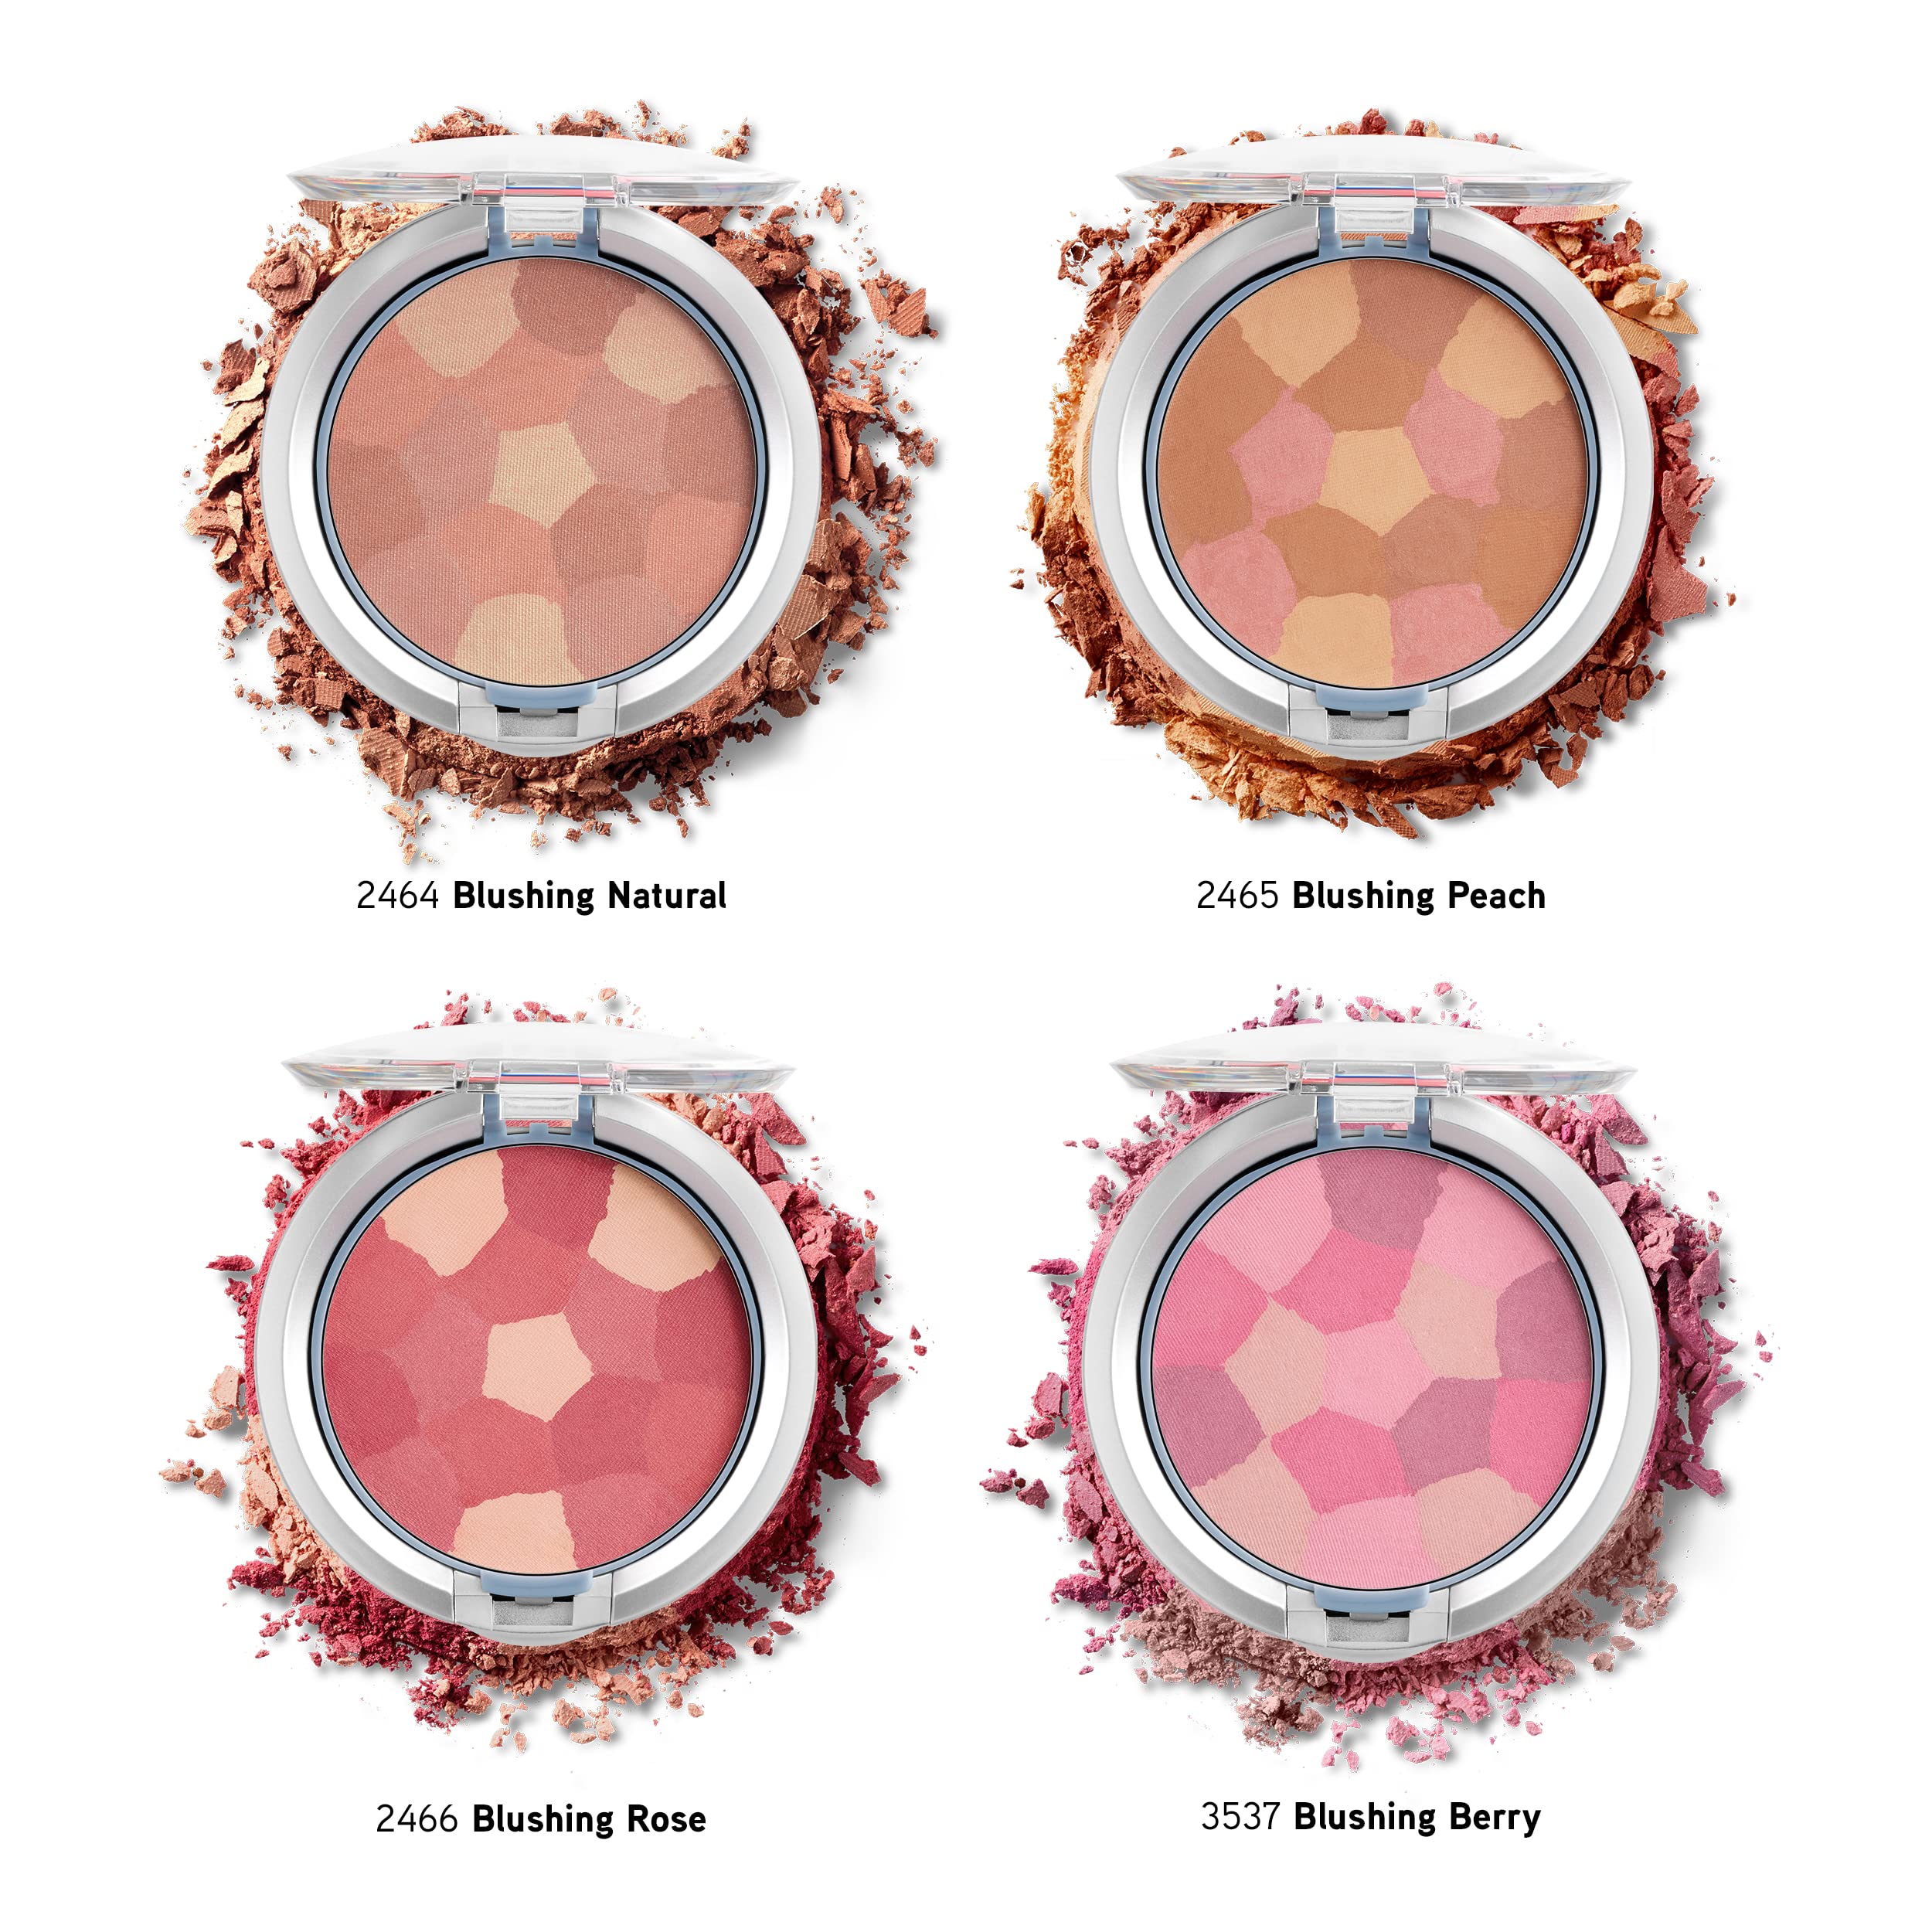 Physicians Formula Powder Palette Multi-Colored Blush Powder Blushing Rose, Dermatologist Tested